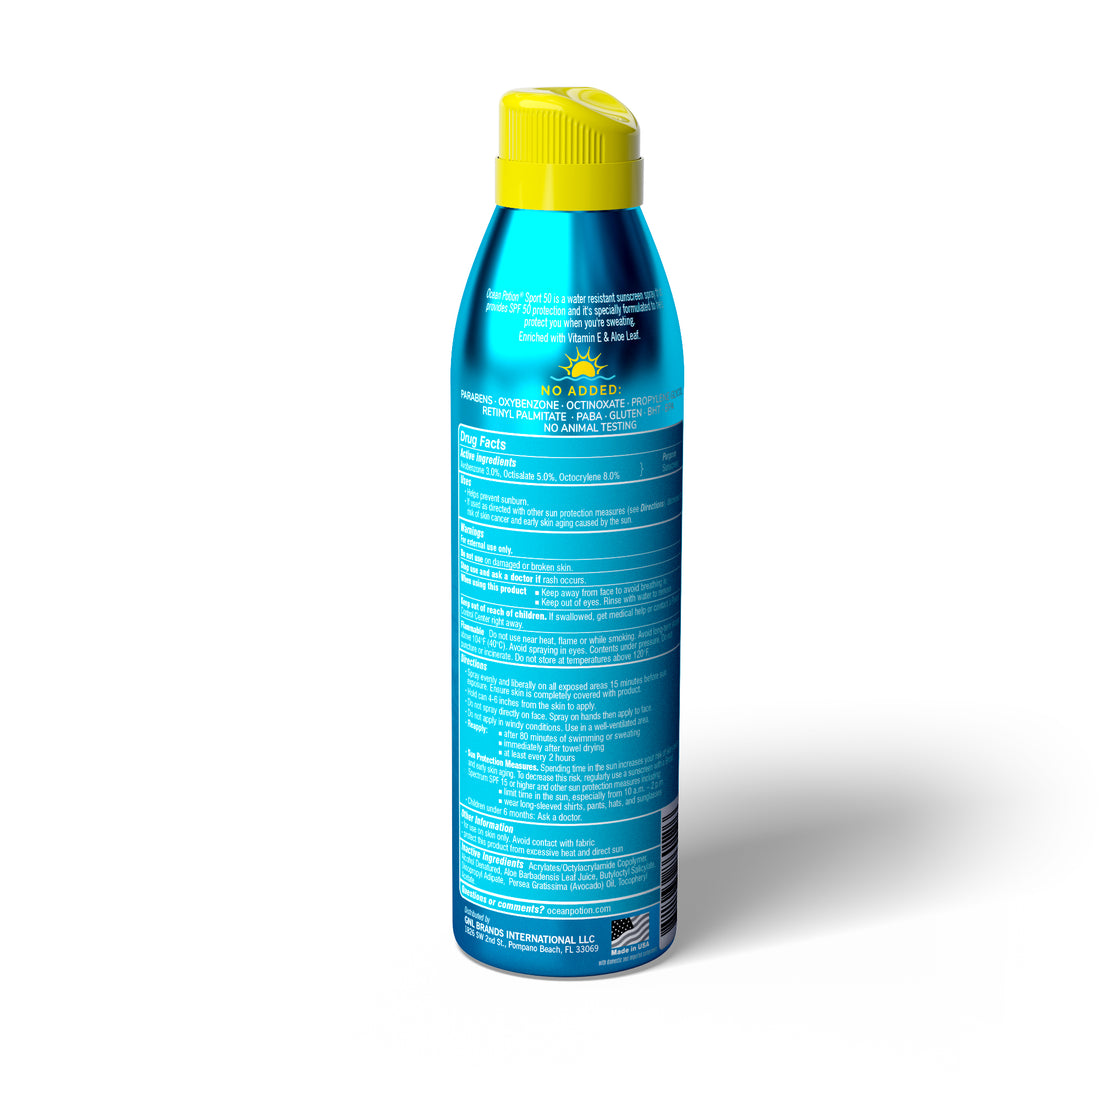 SPF 70 Sunscreen Spray